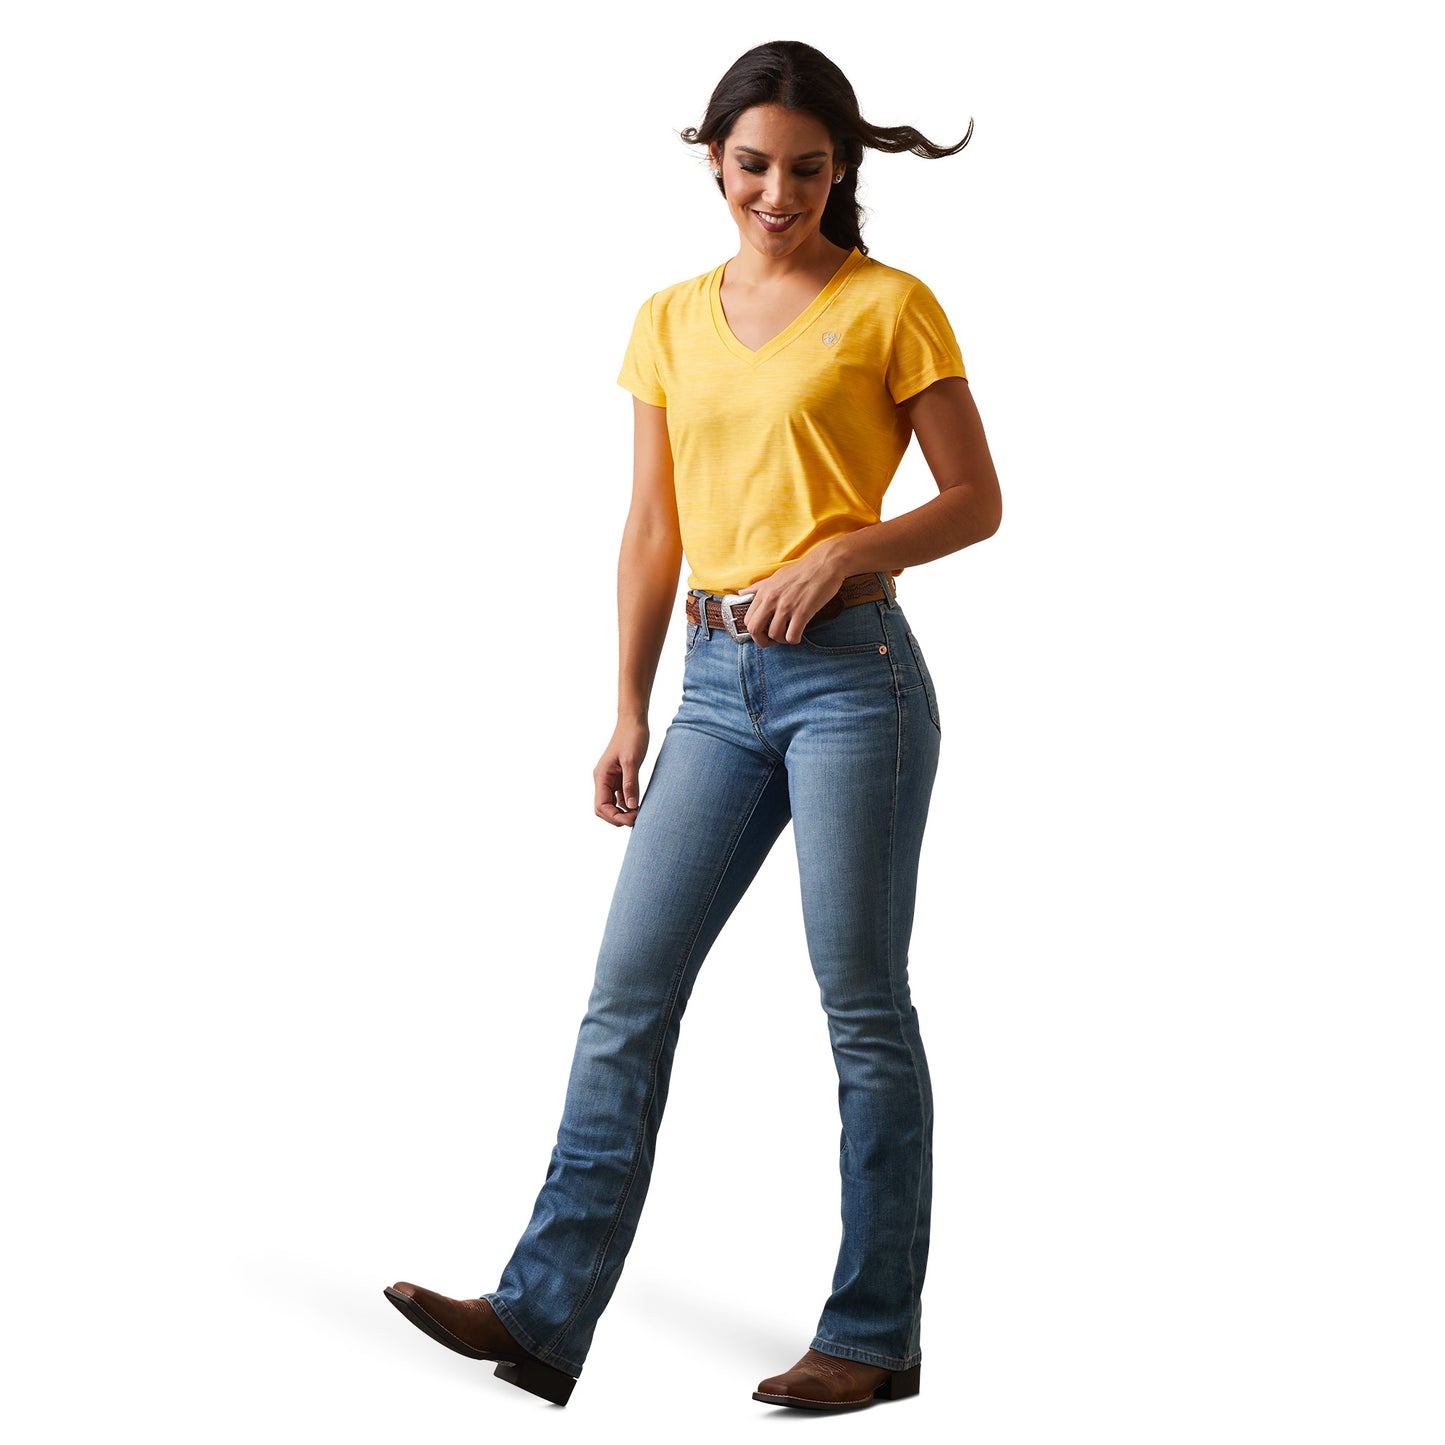 Load image into Gallery viewer, Ariat® Ladies Laguna Yolk Yellow T-Shirt 10043533
